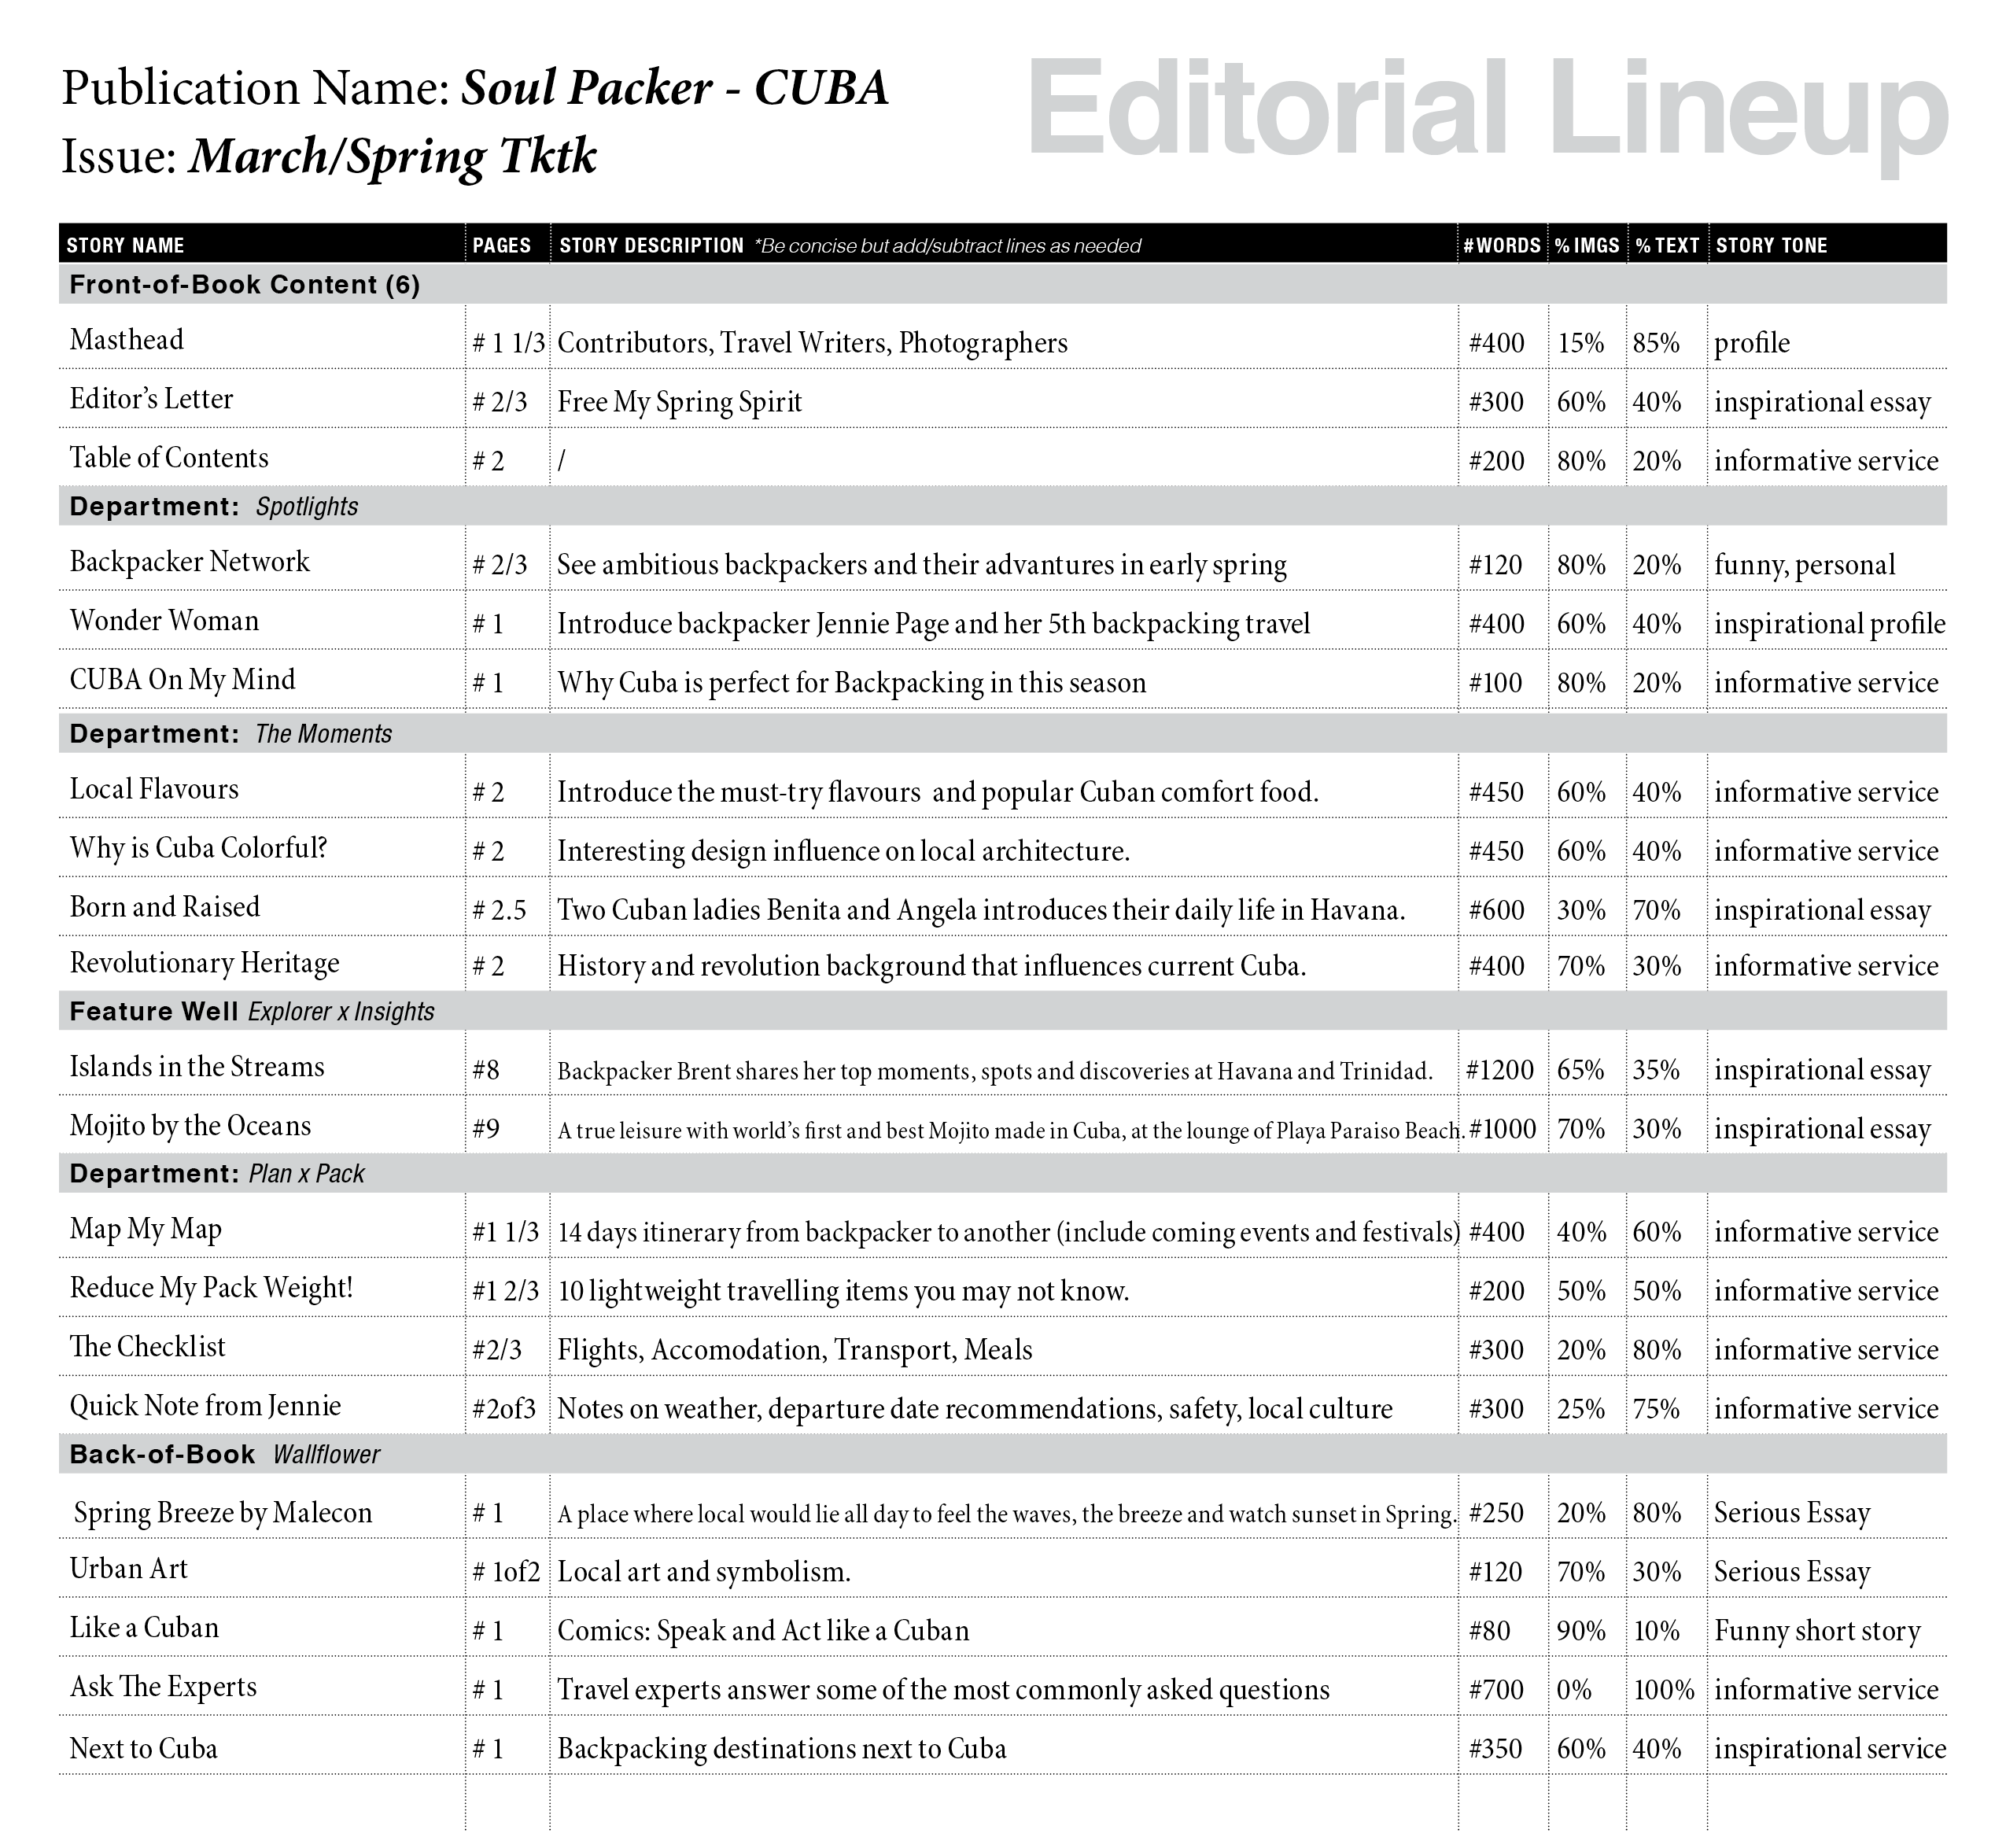 Editorial Lineup